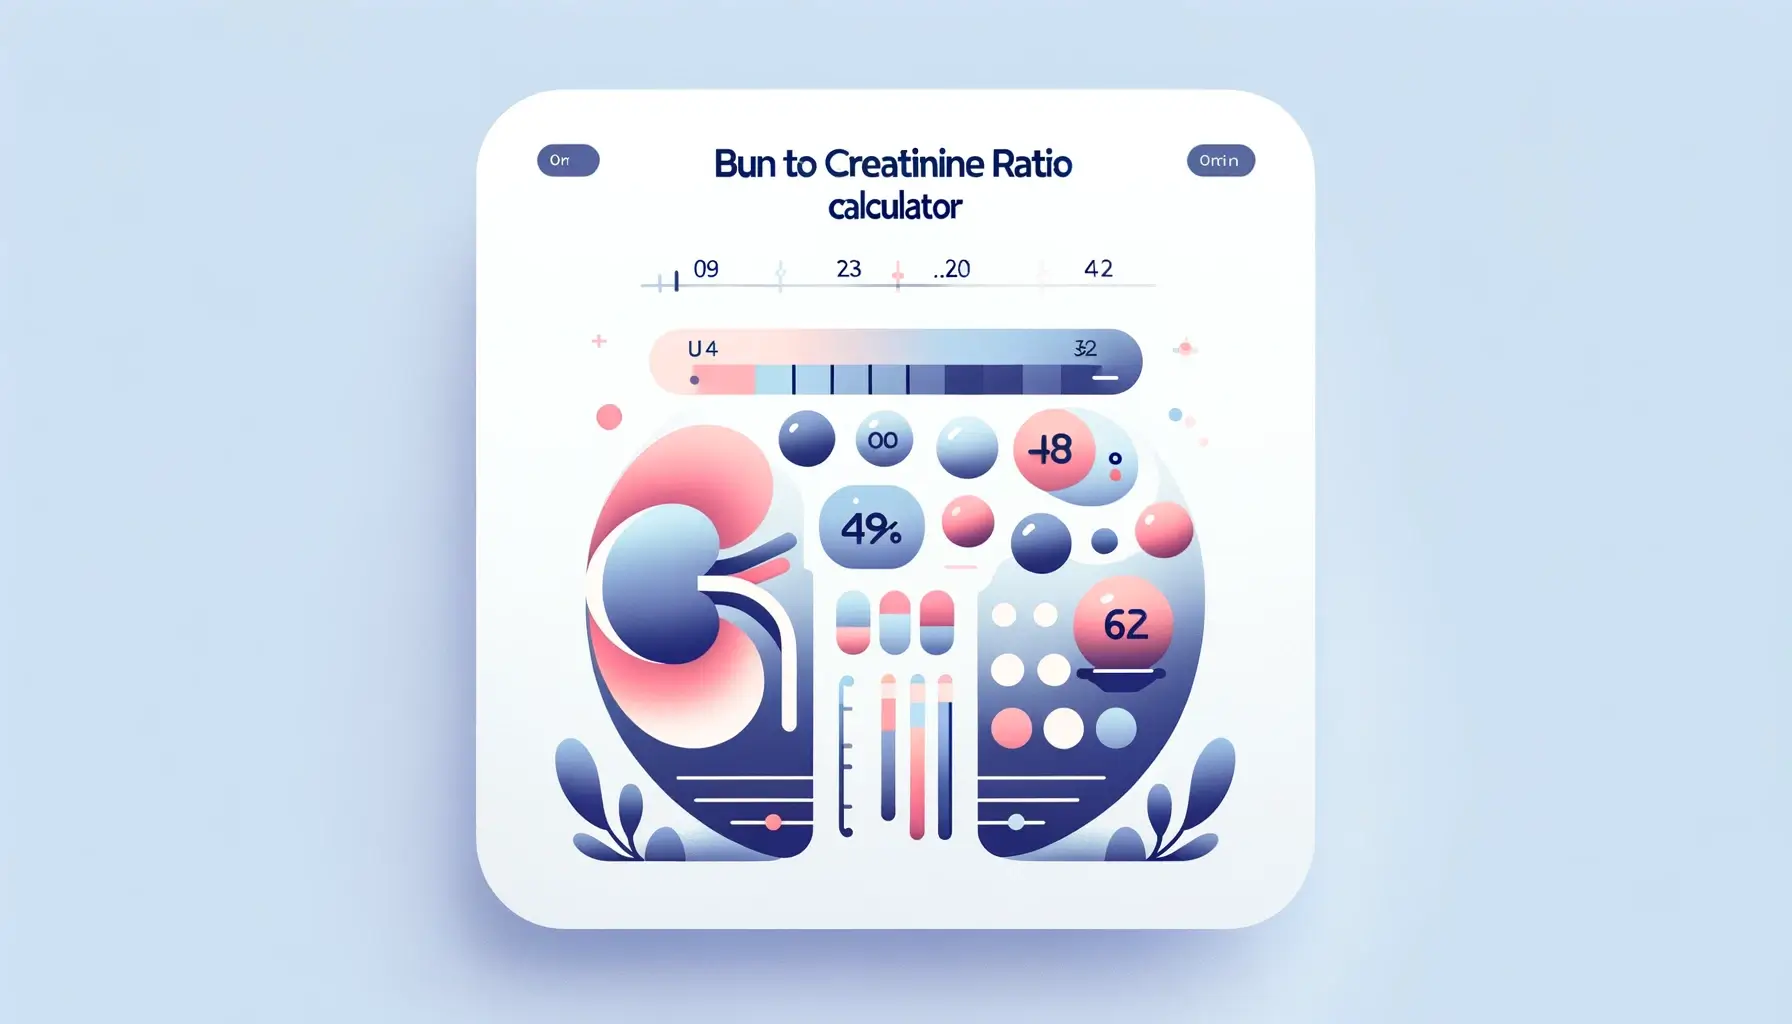 BUN to Creatinine Ratio Calculator